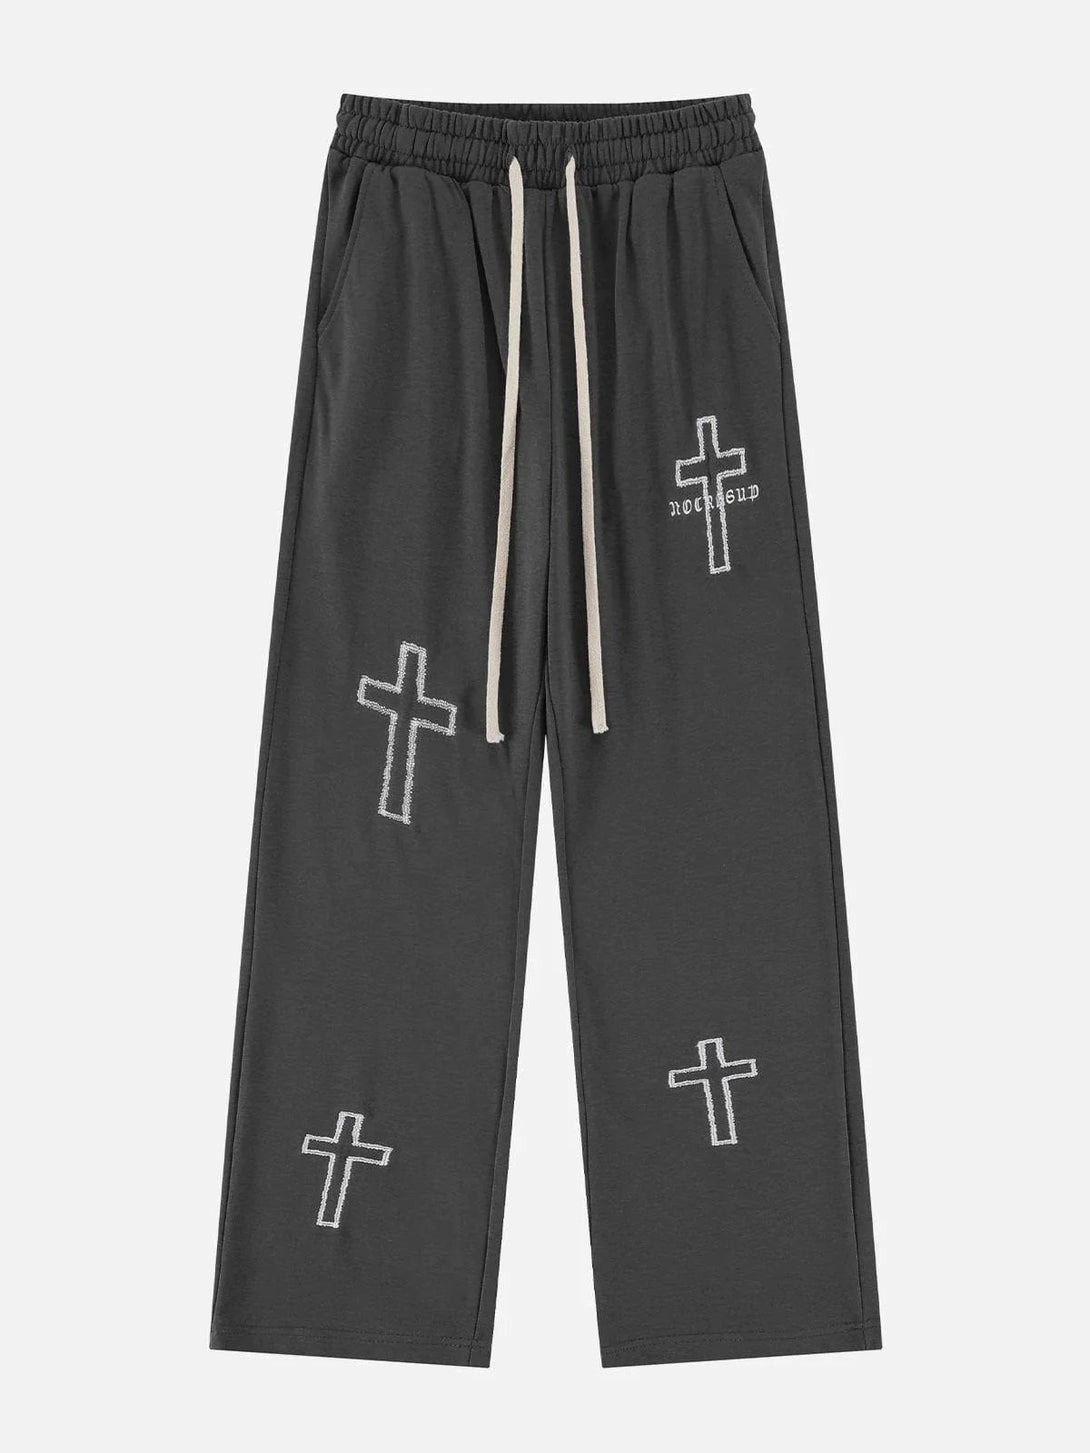 Majesda® - Cross Embroidery Pants outfit ideas streetwear fashion